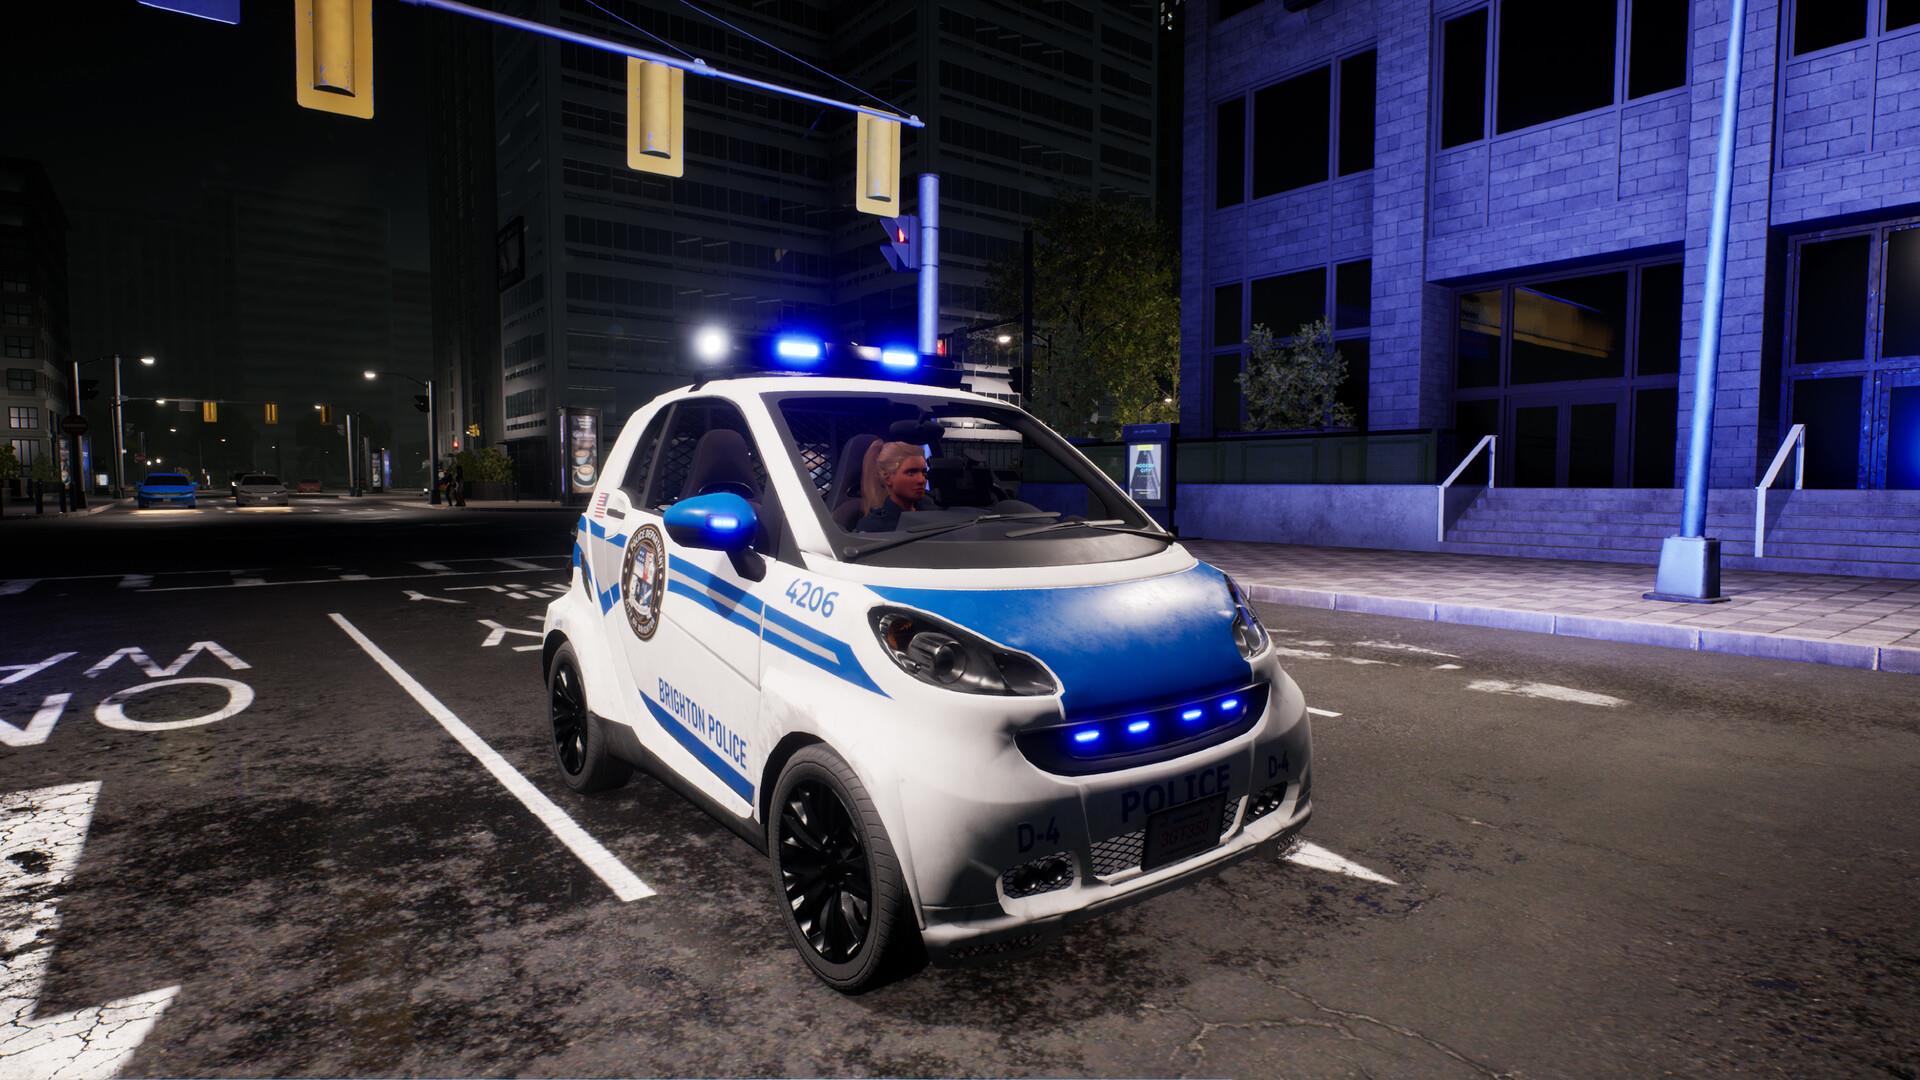 Police Simulator: Patrol Officers - Article Gaming released getting new keeps Nexus better, DLC